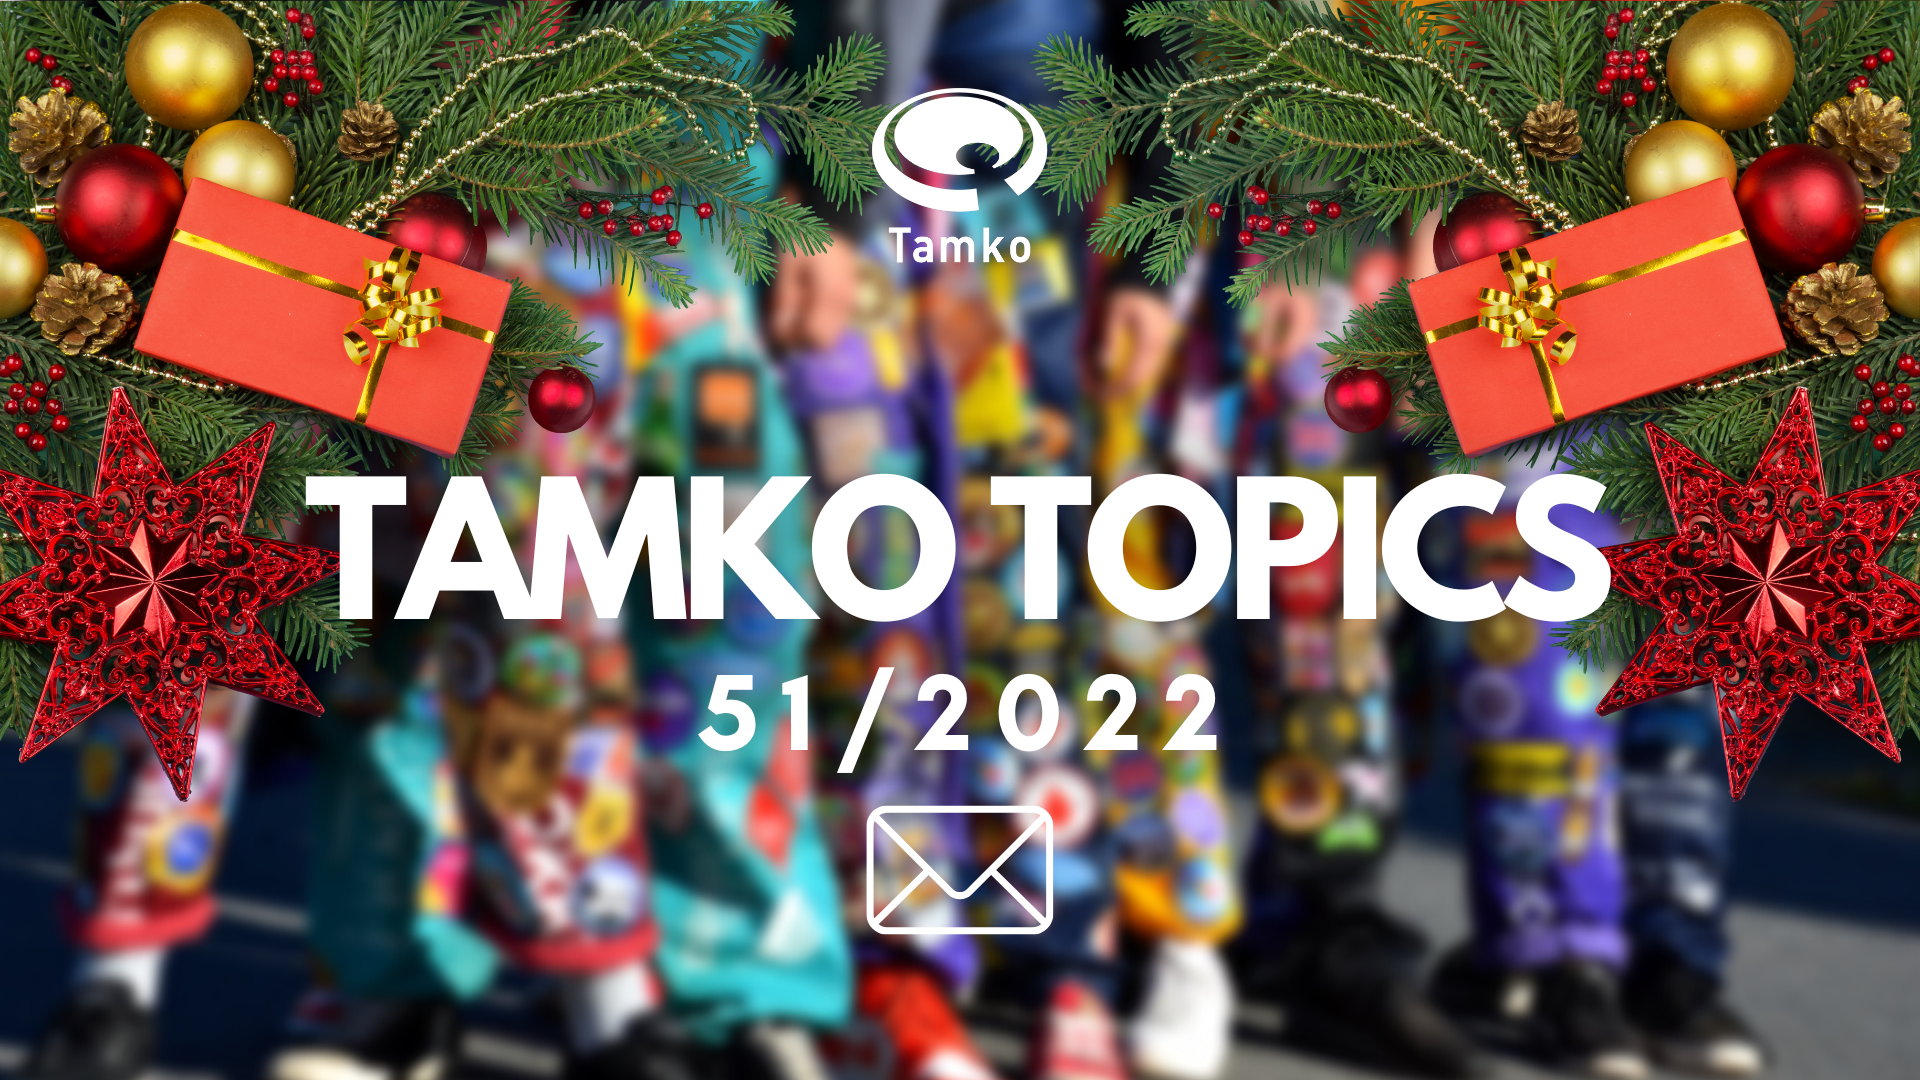 Tamko Topics 51/2022